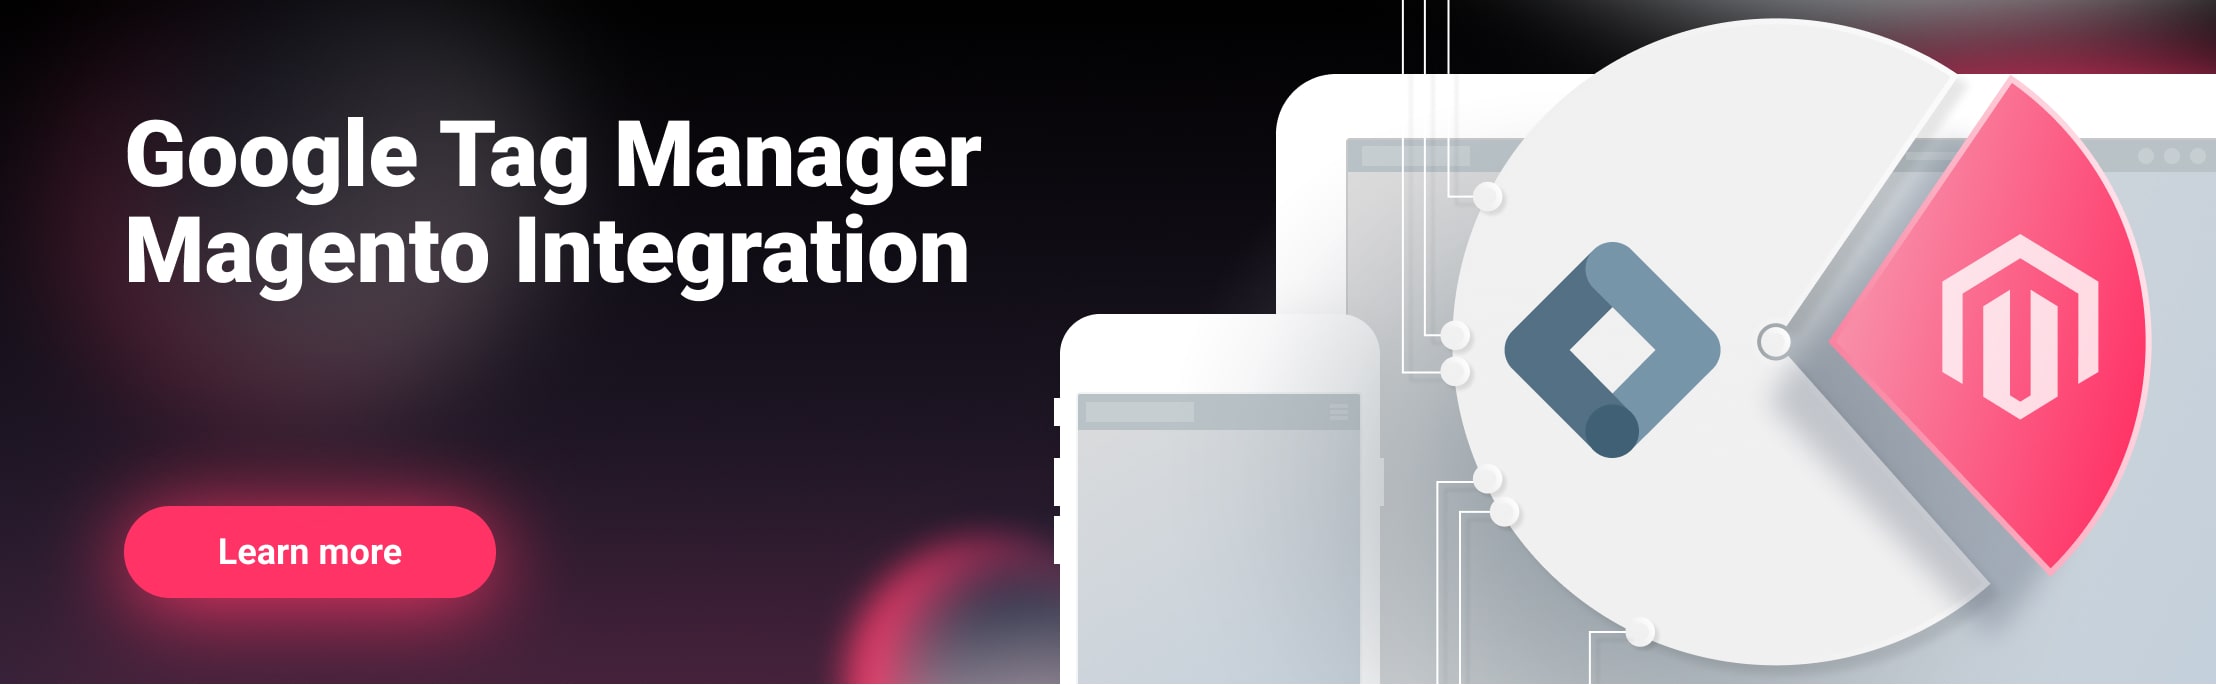 Google Tag Manager Magento Integration